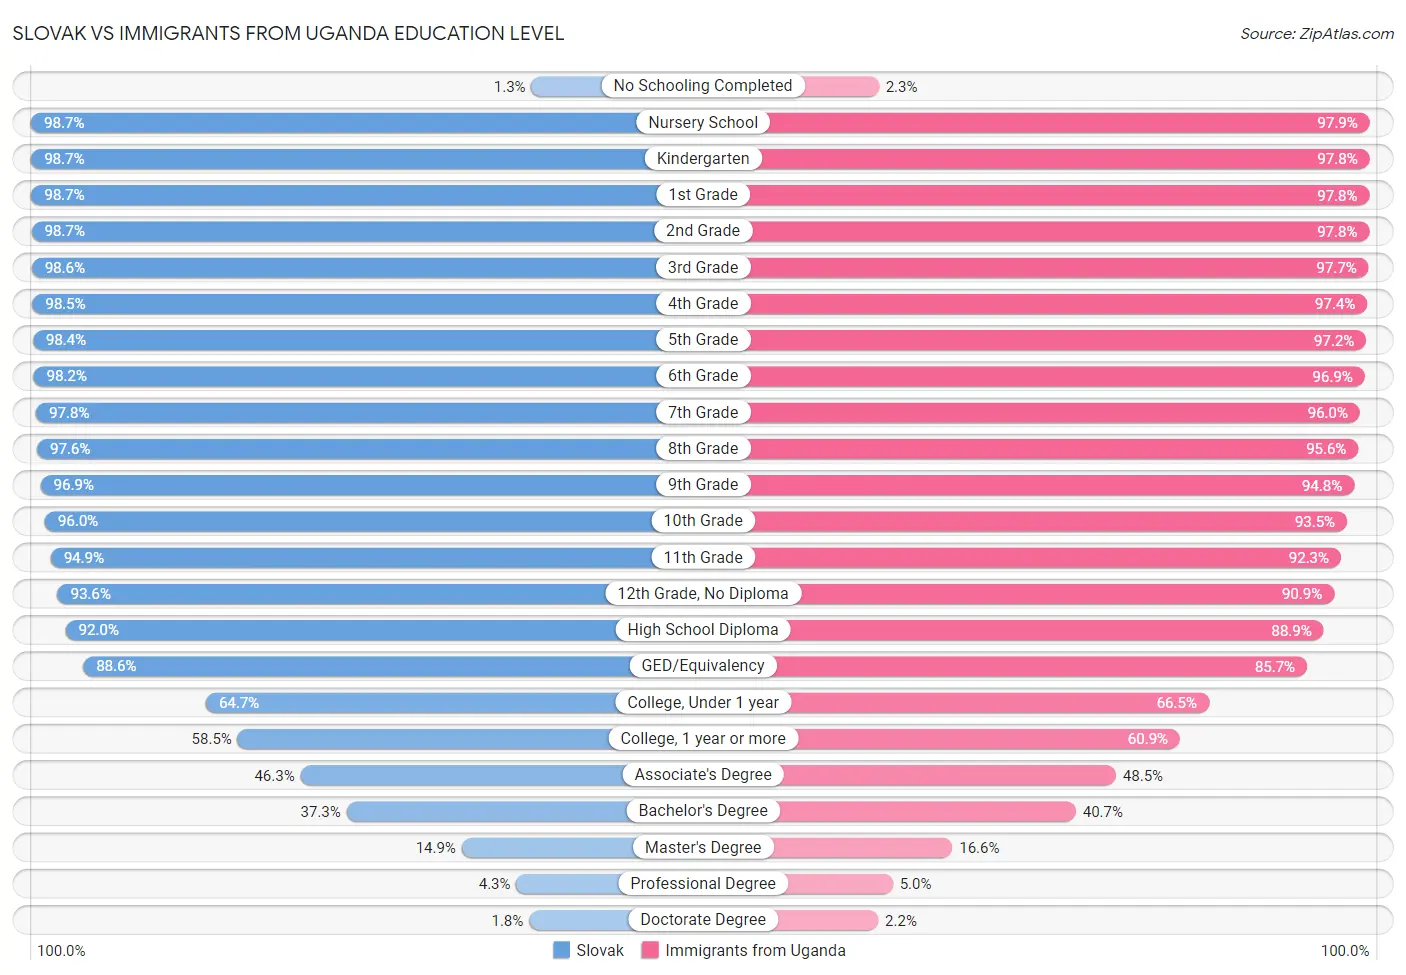 Slovak vs Immigrants from Uganda Education Level